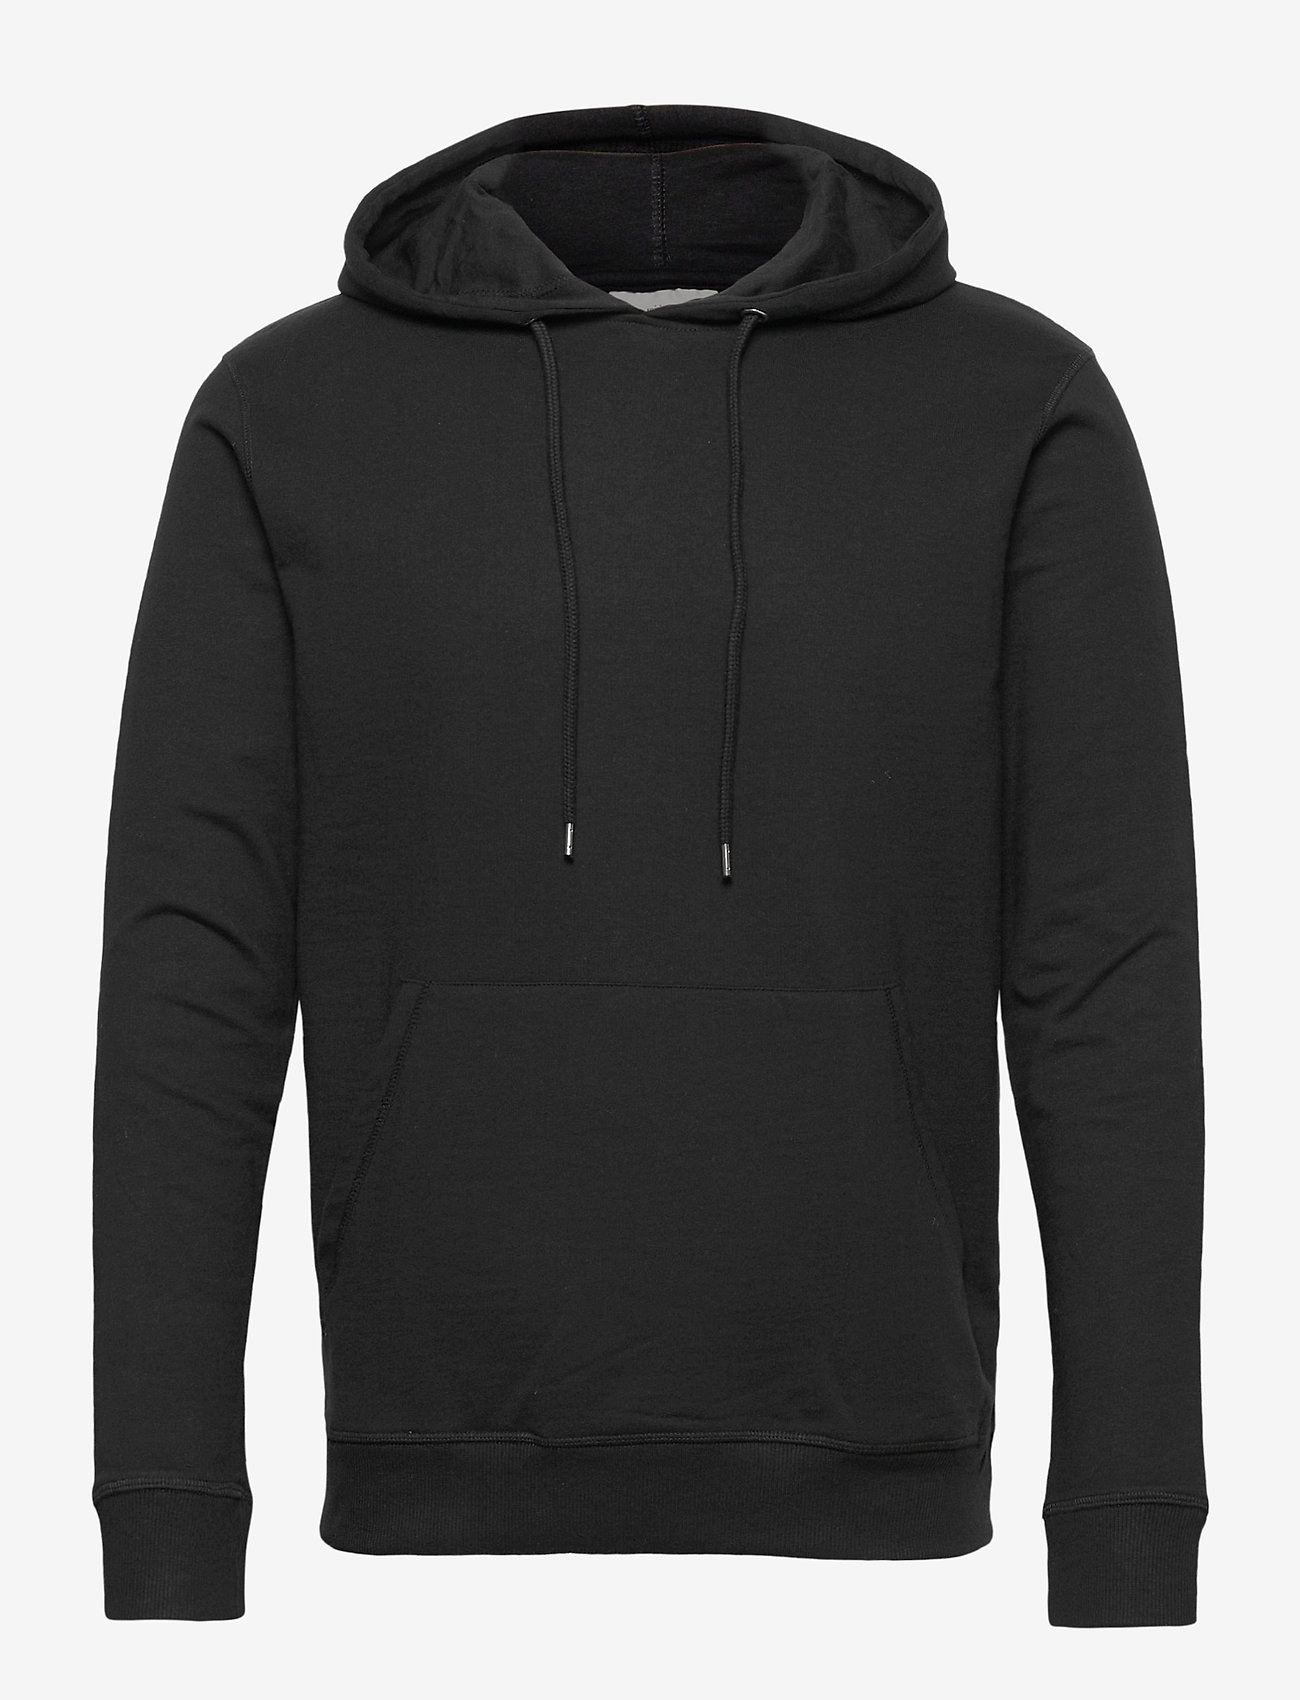 Minimum - storms - hoodies - black - 0